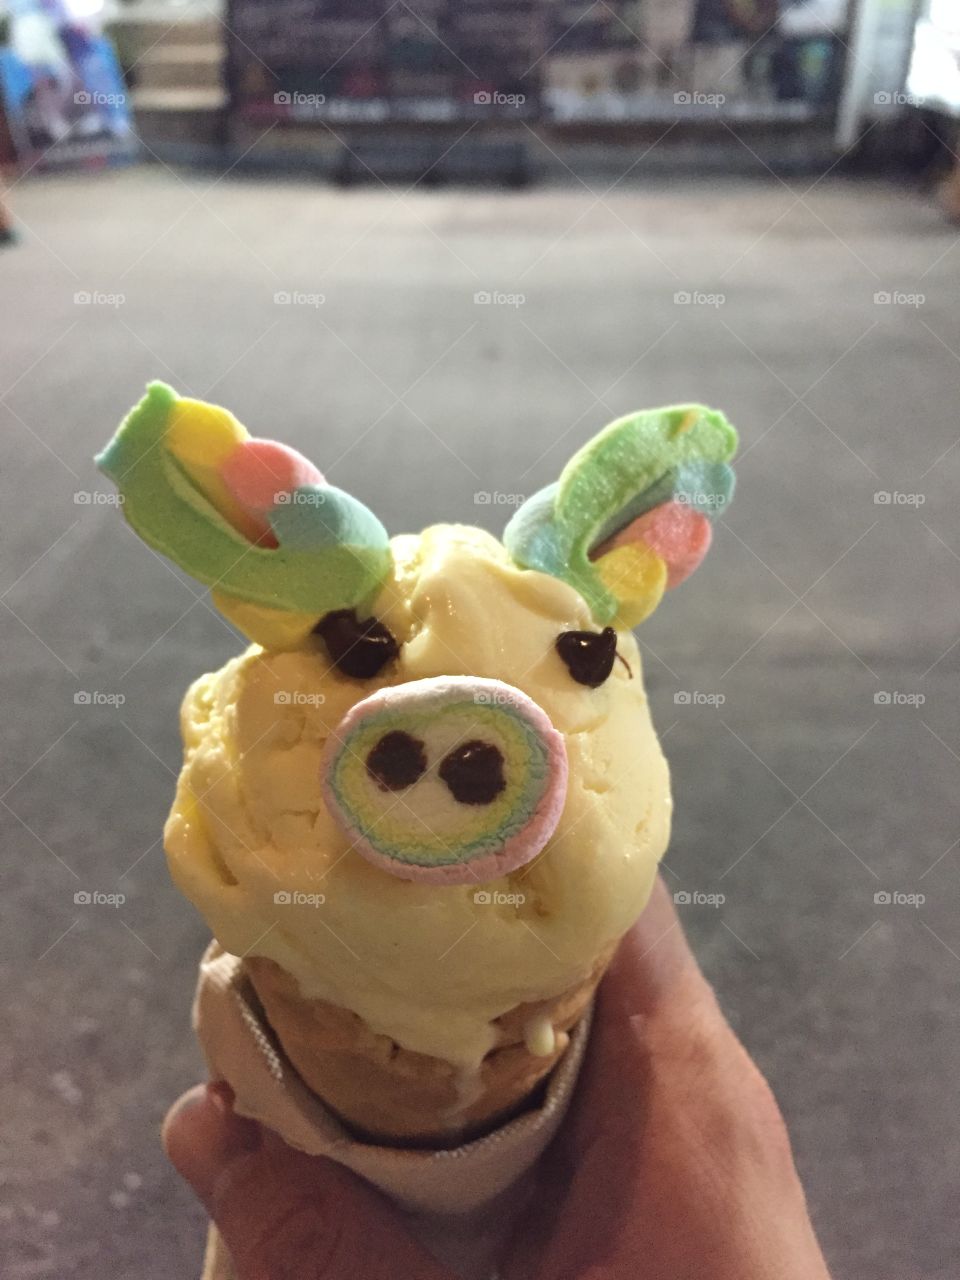 Pig shaped ice cream.